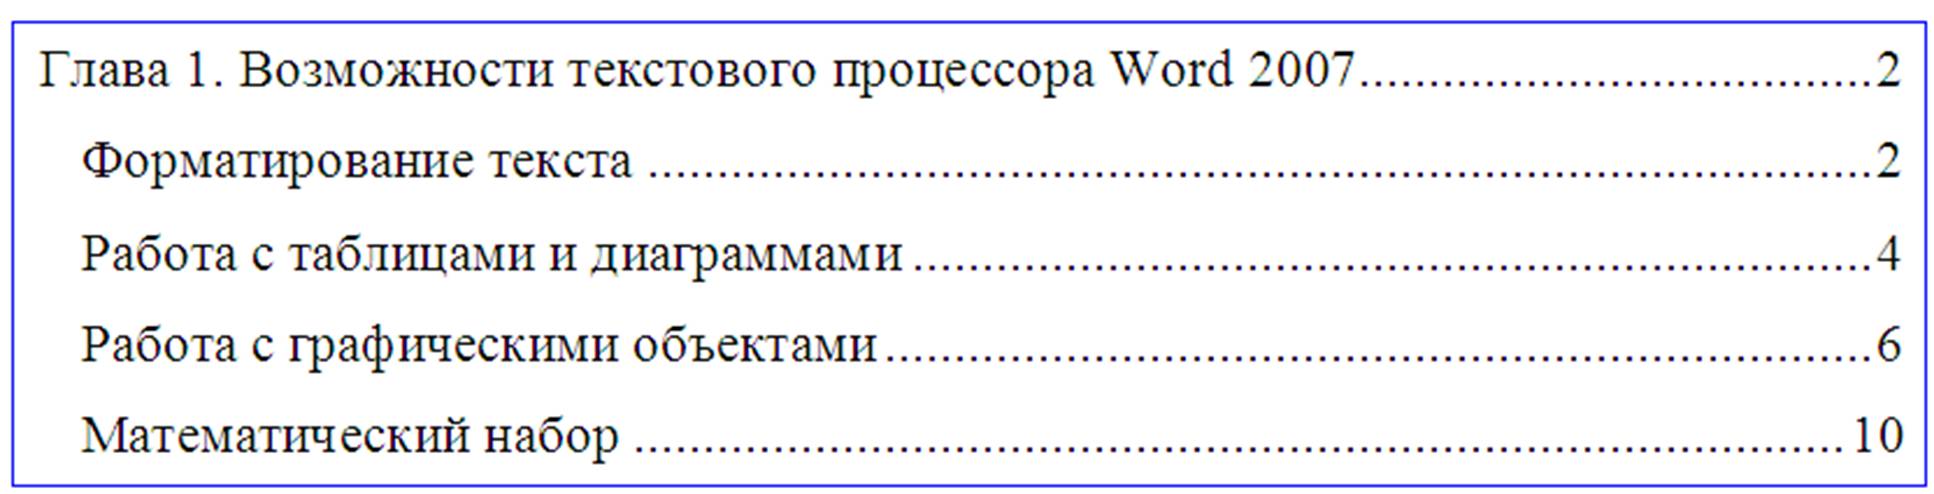 http://test.i-exam.ru/training/student/pic/3210_260313/97be348c1598cd91c822f8ad25f3d2be.jpg